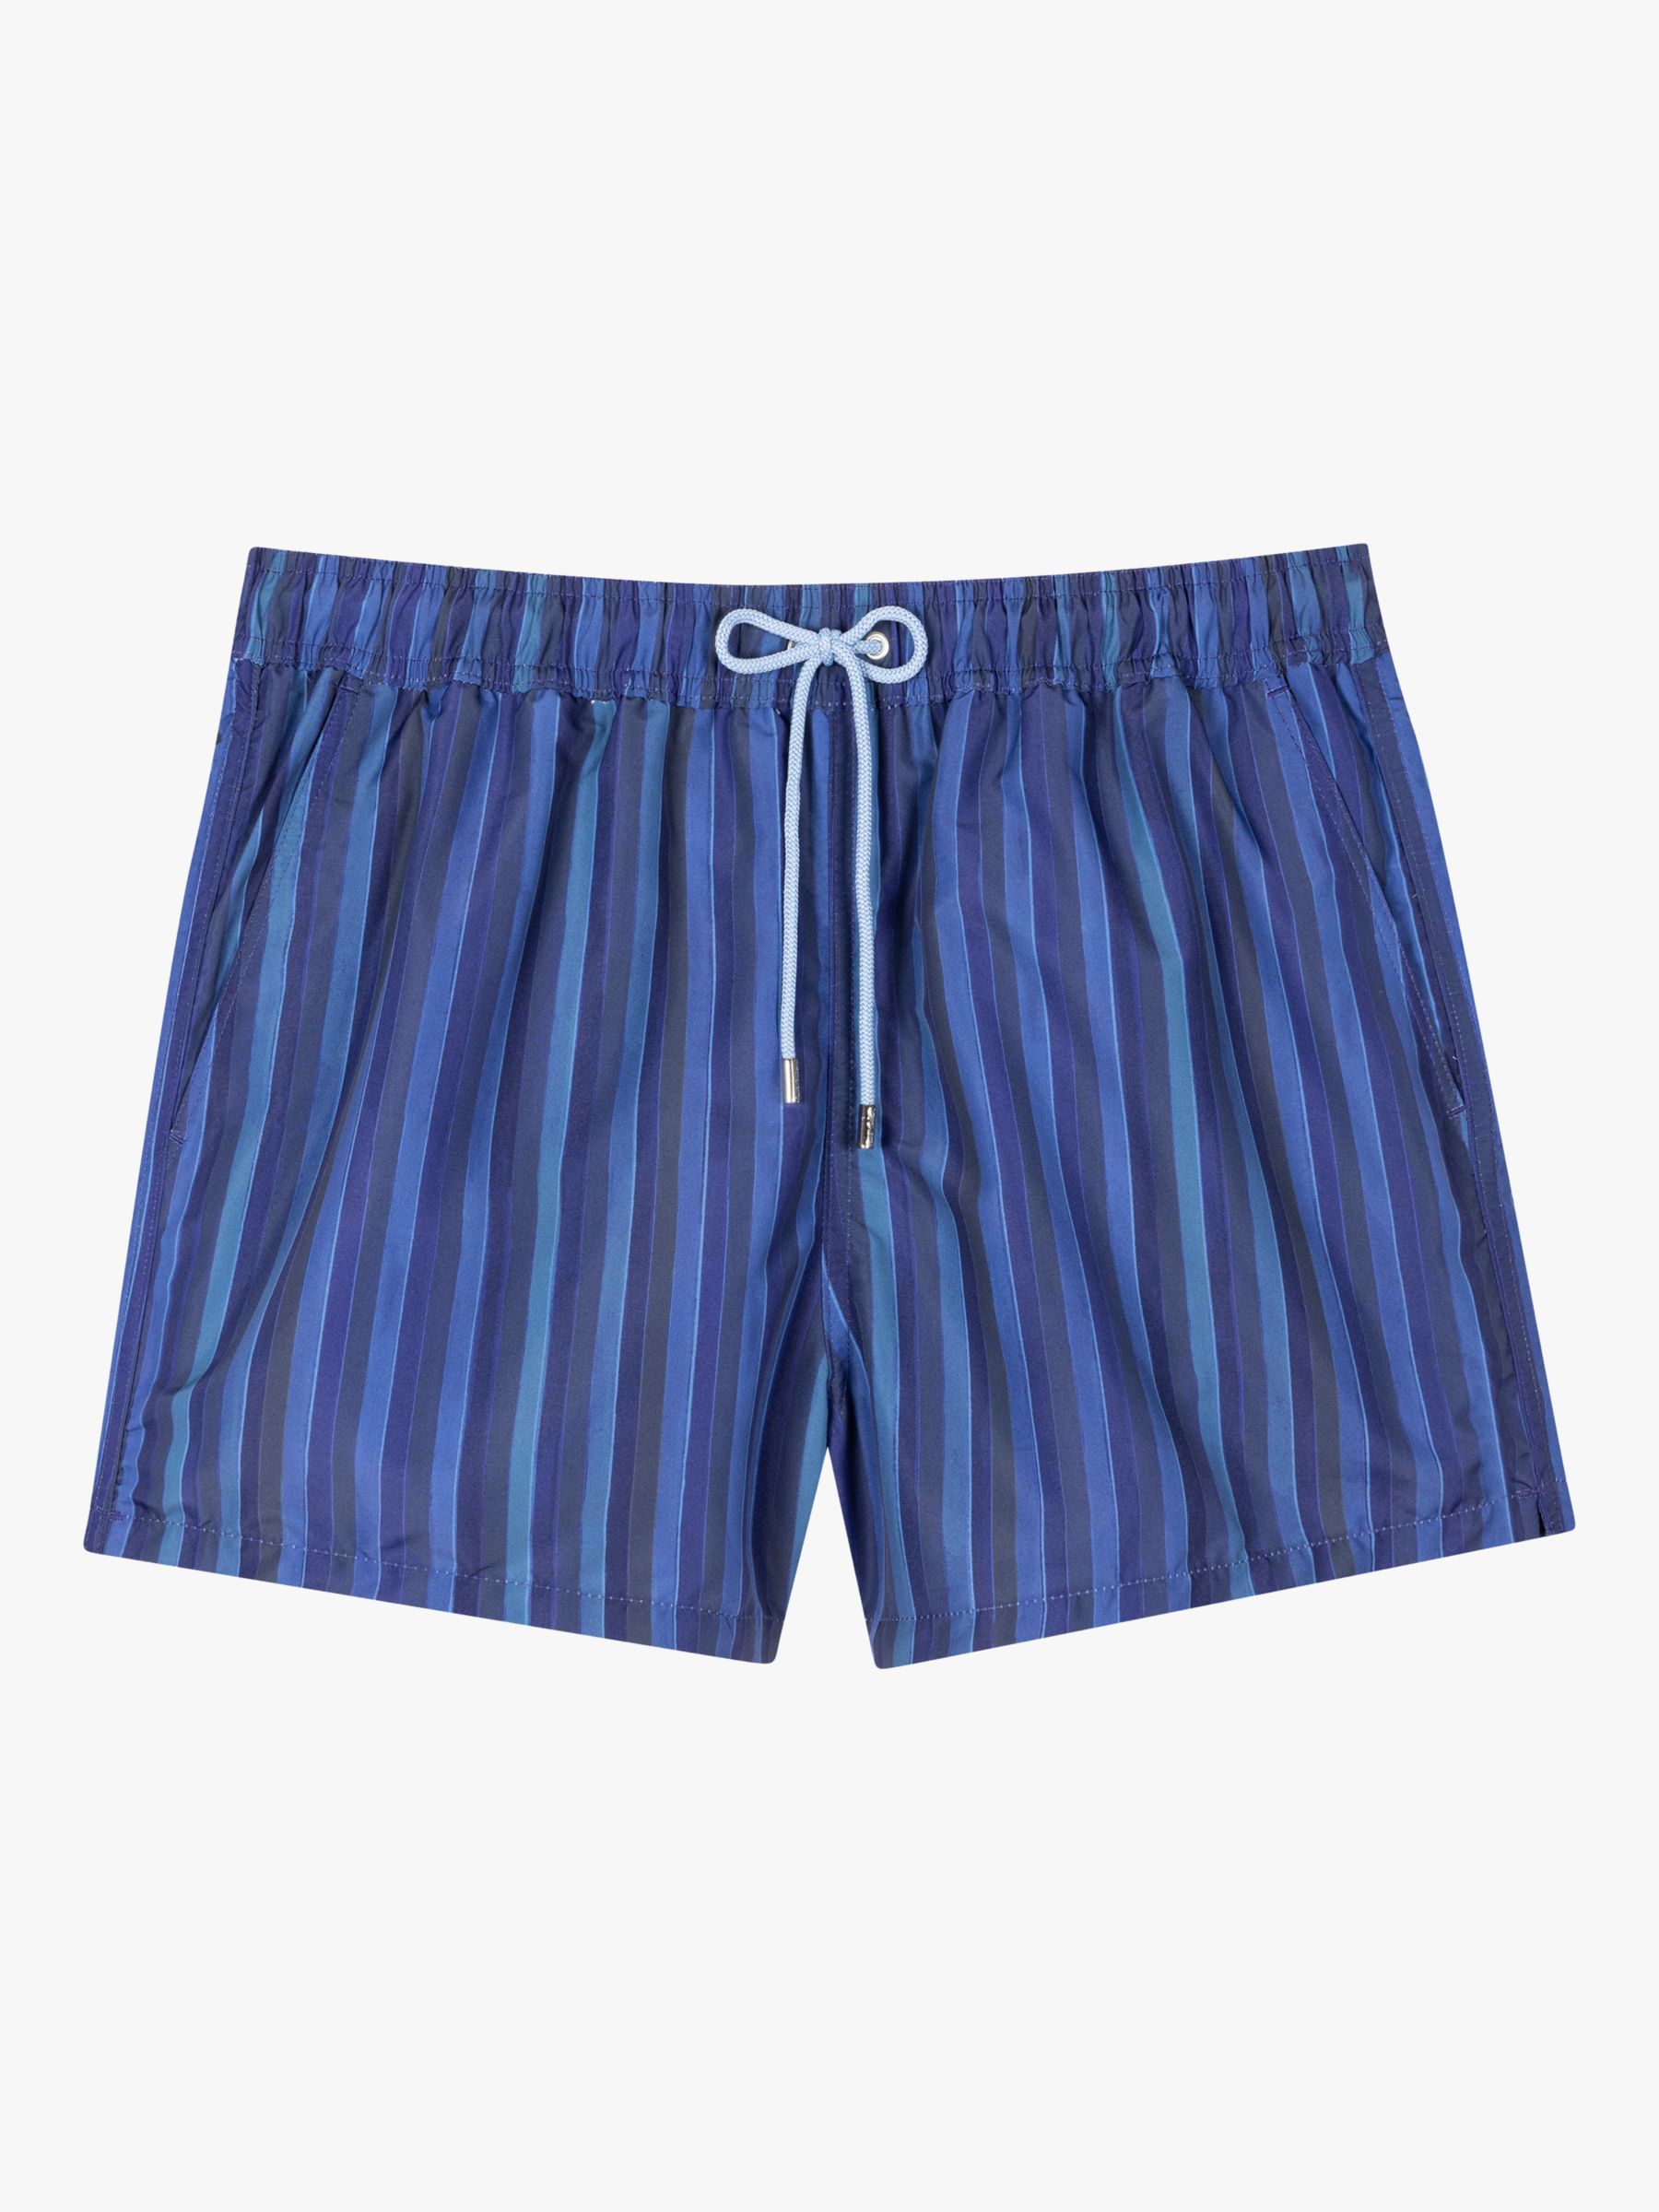 Paul Smith Pinstripe Swim Shorts, Blue, XL